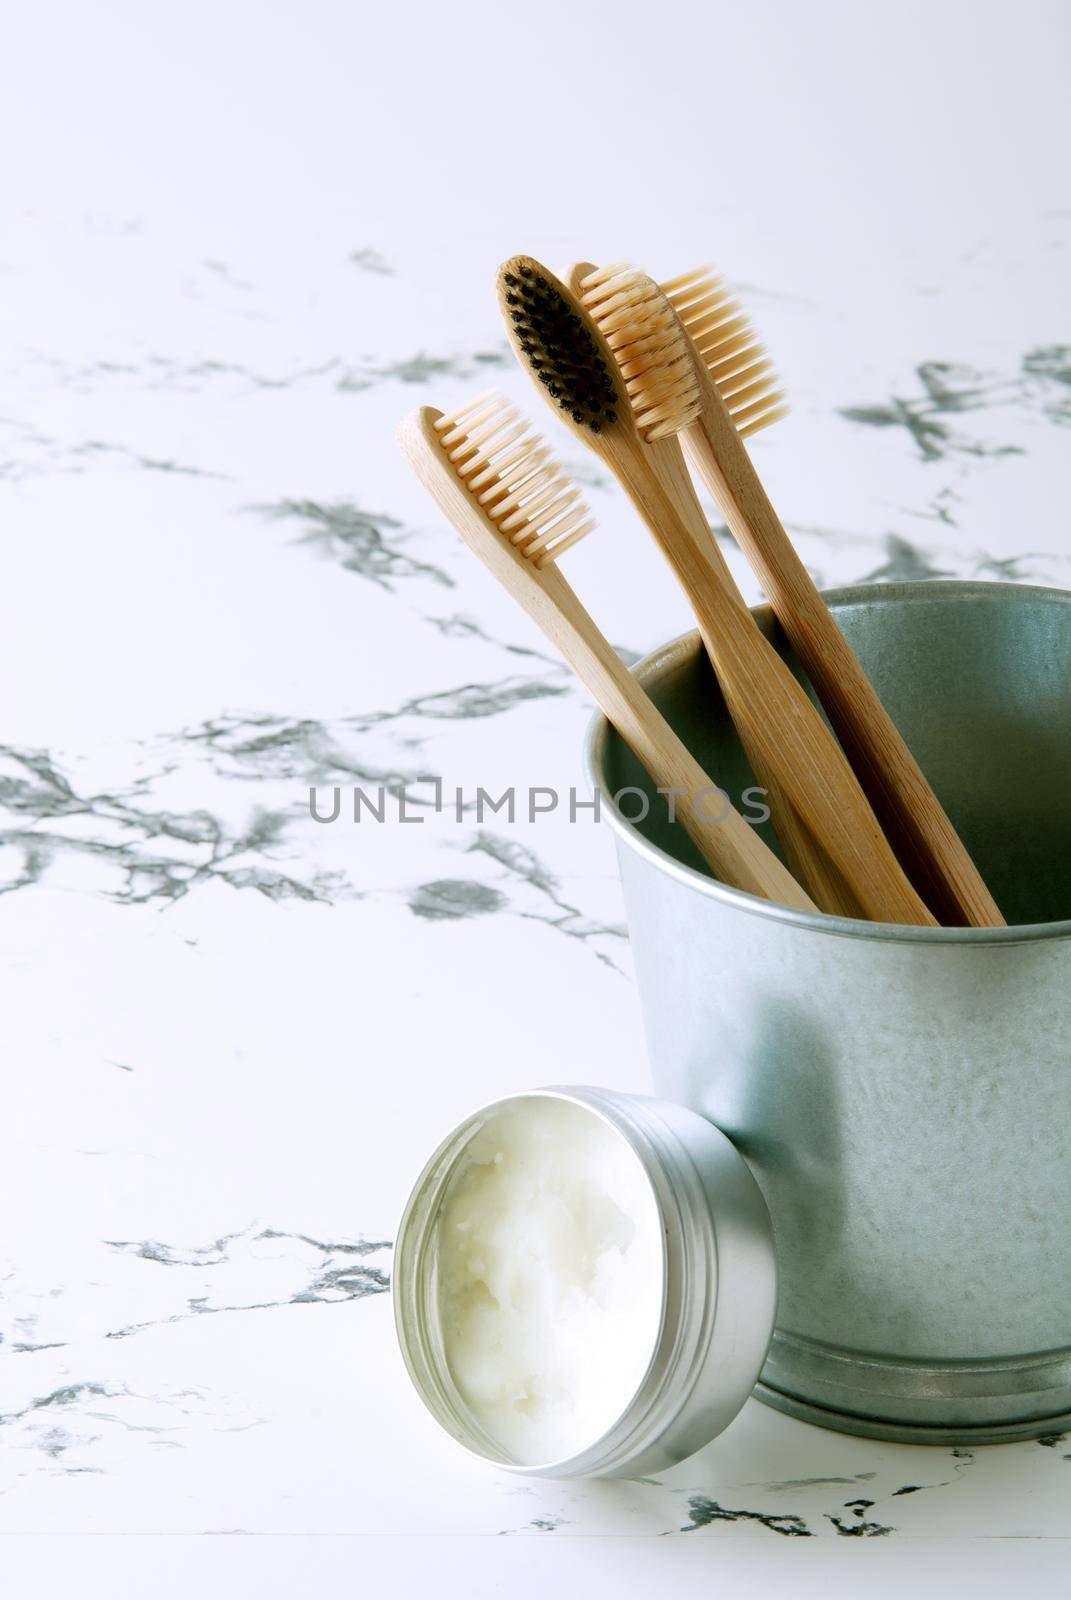 bamboo teeth brushes in bathroom on marbel background by maramorosz